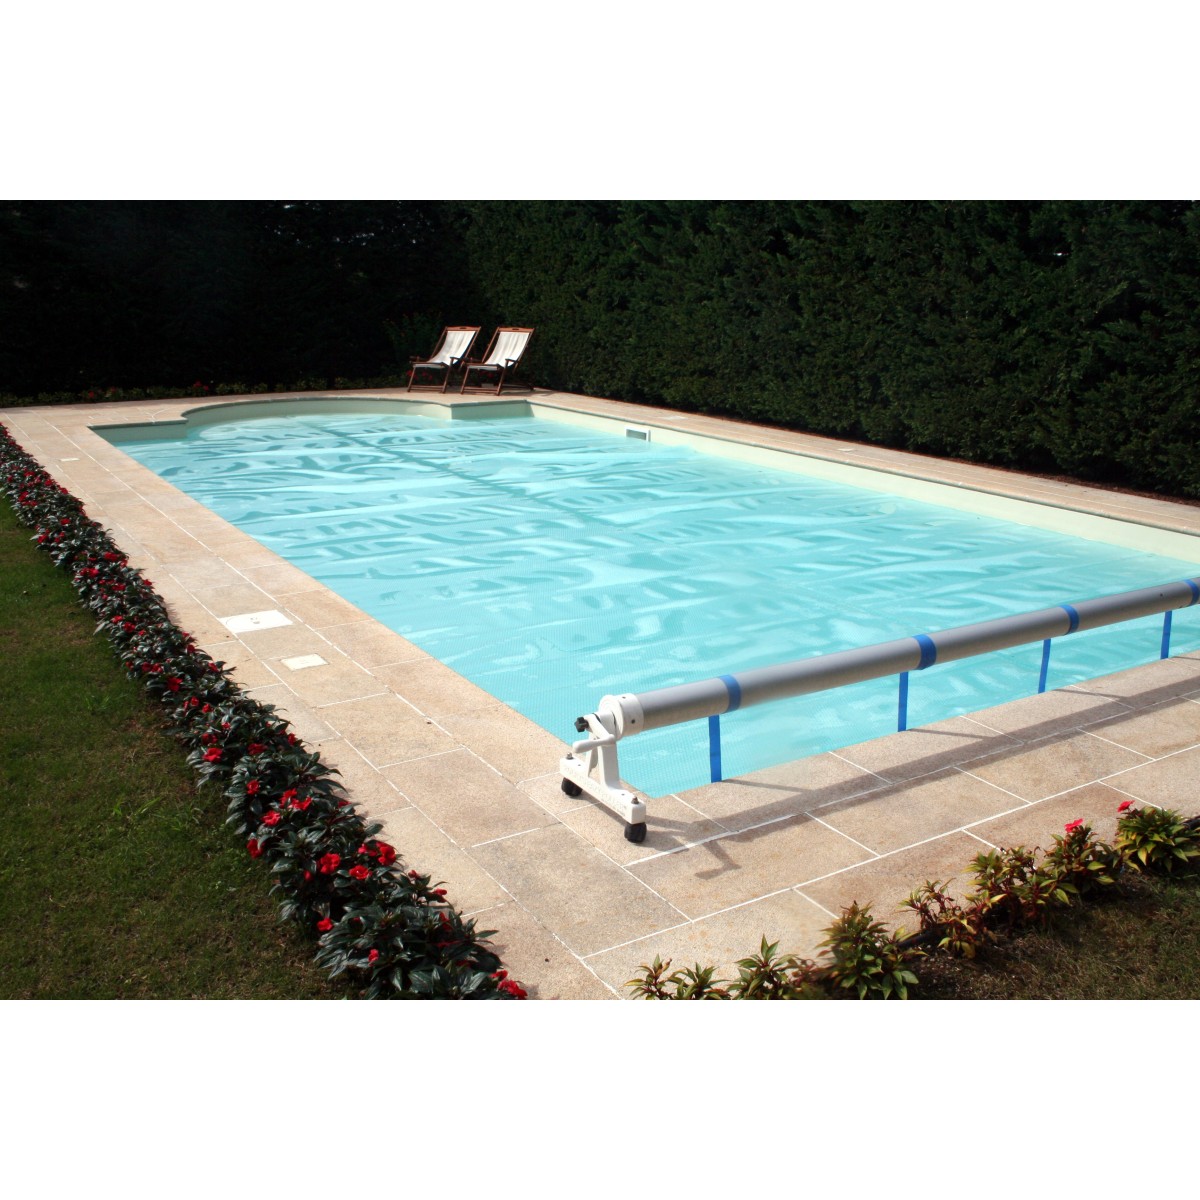 Copertura isotermica piscina Sunguard De Lux - misura 4x9